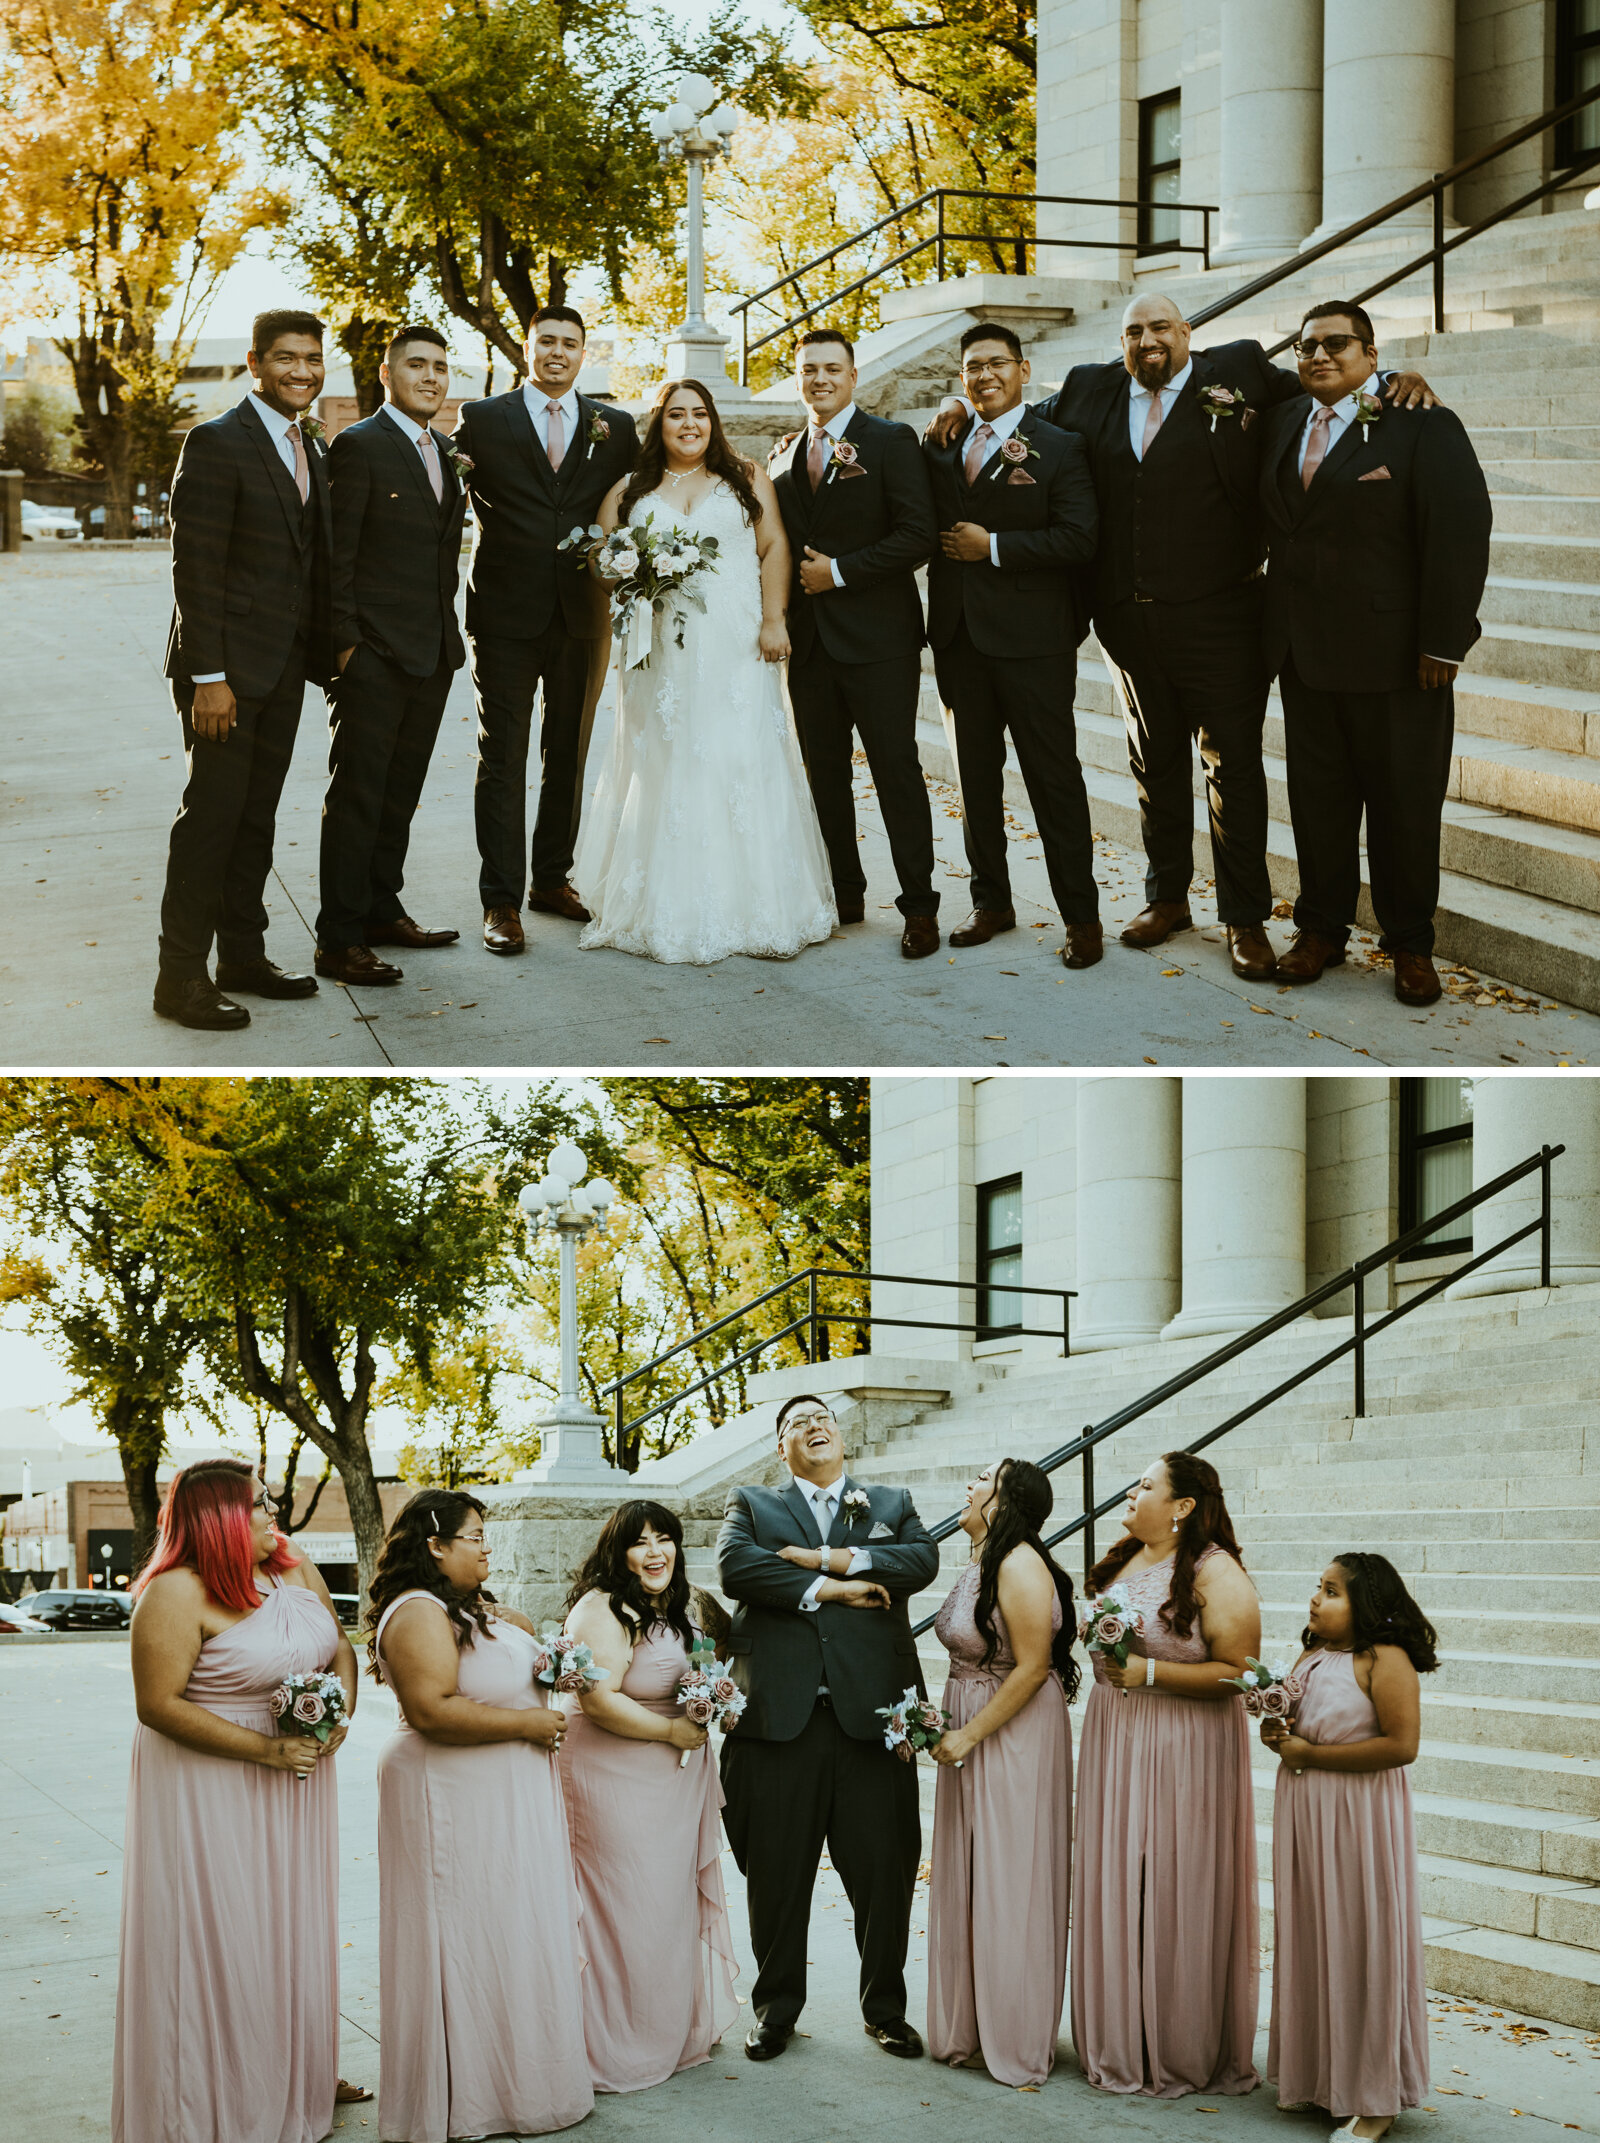 GRAND HIGHLAND HOTEL PRESCOTT ARIZONA WEDDING PHOTOGRAPHY WEDDING PARTY POSING IDEAS.jpg